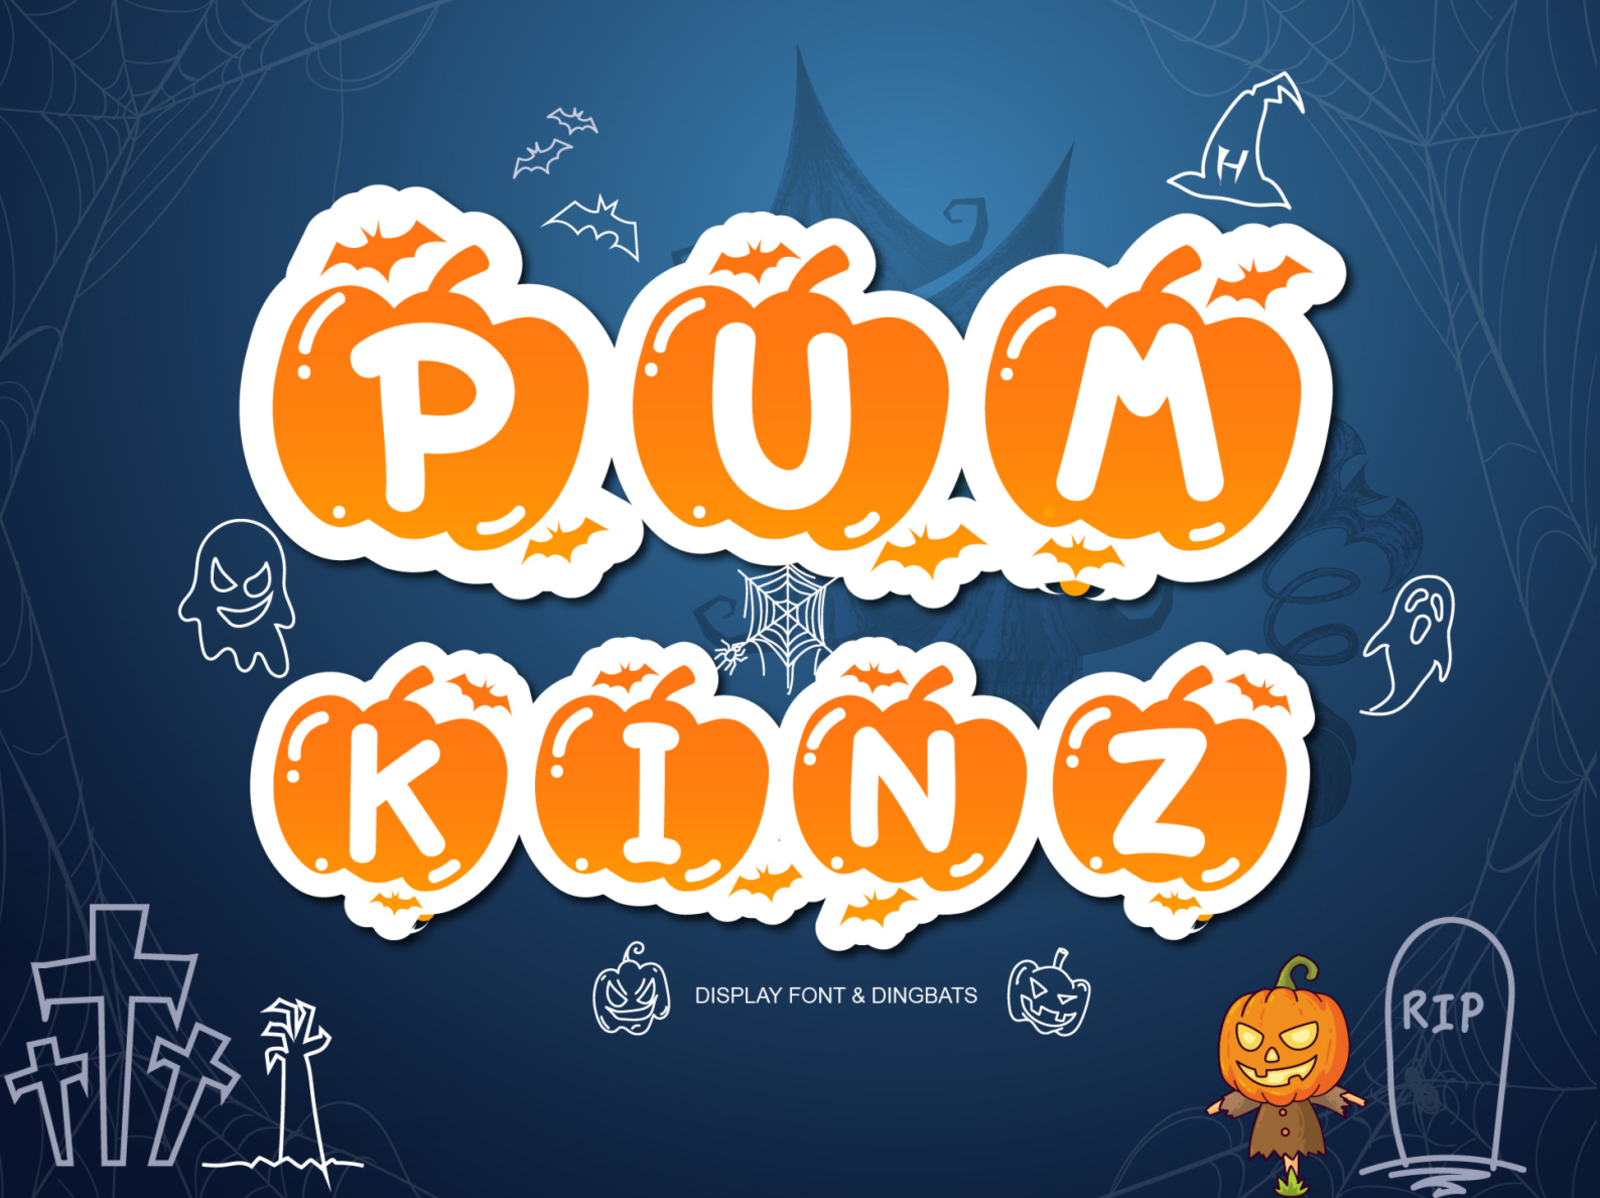 Download Free Pumkinz Dingbats Font By Supipat Chimwichian On Dribbble PSD Mockup Template